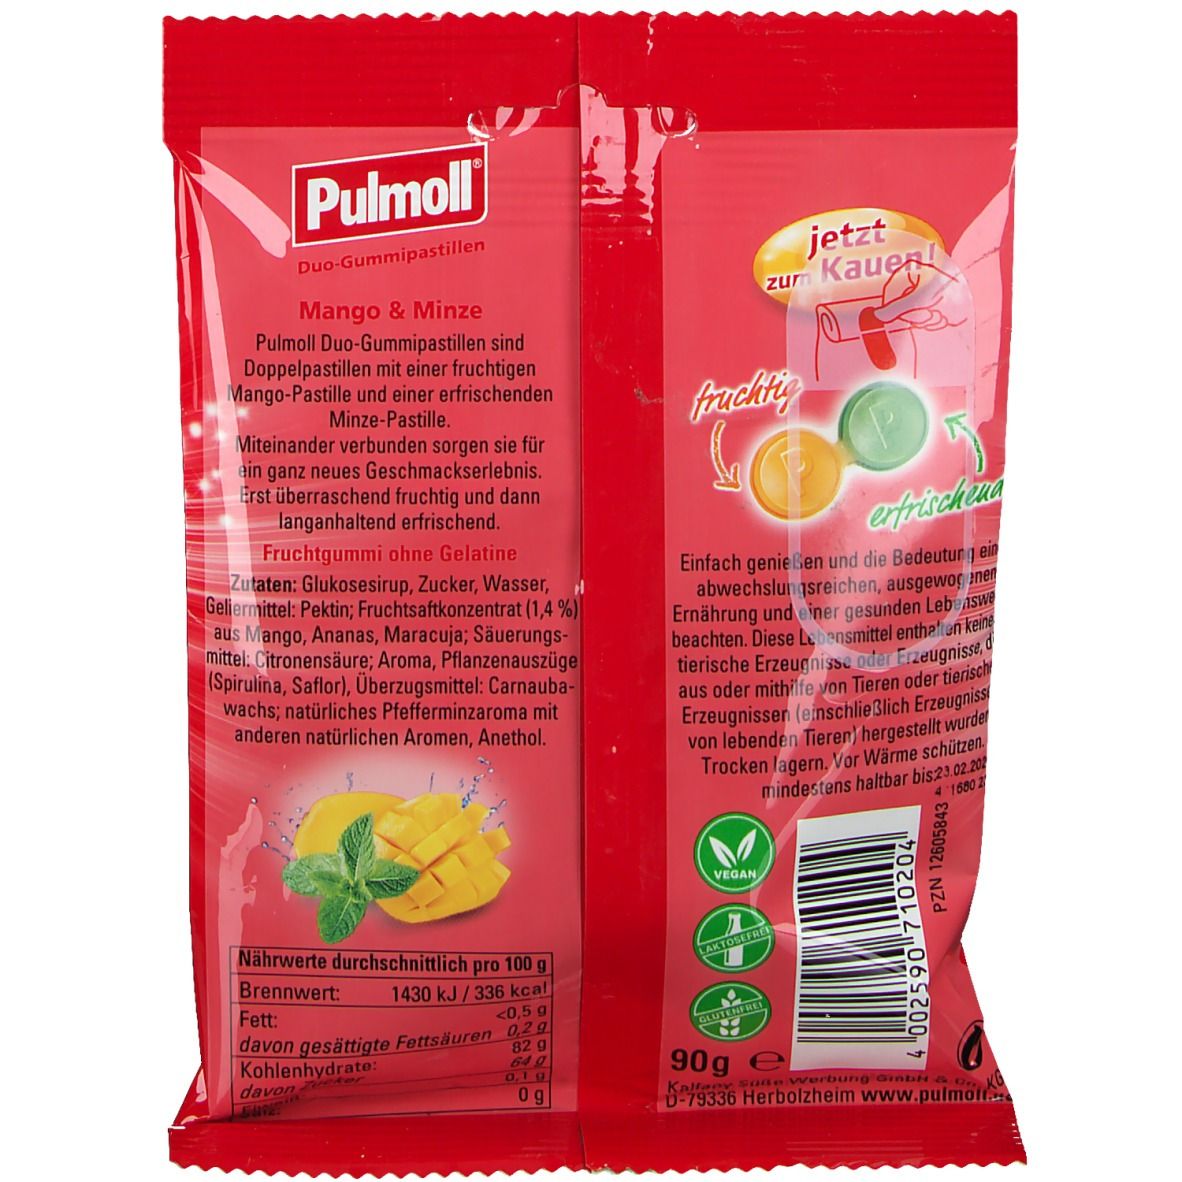 Pullmoll® Duo-Gummipastillen Mango & Minze